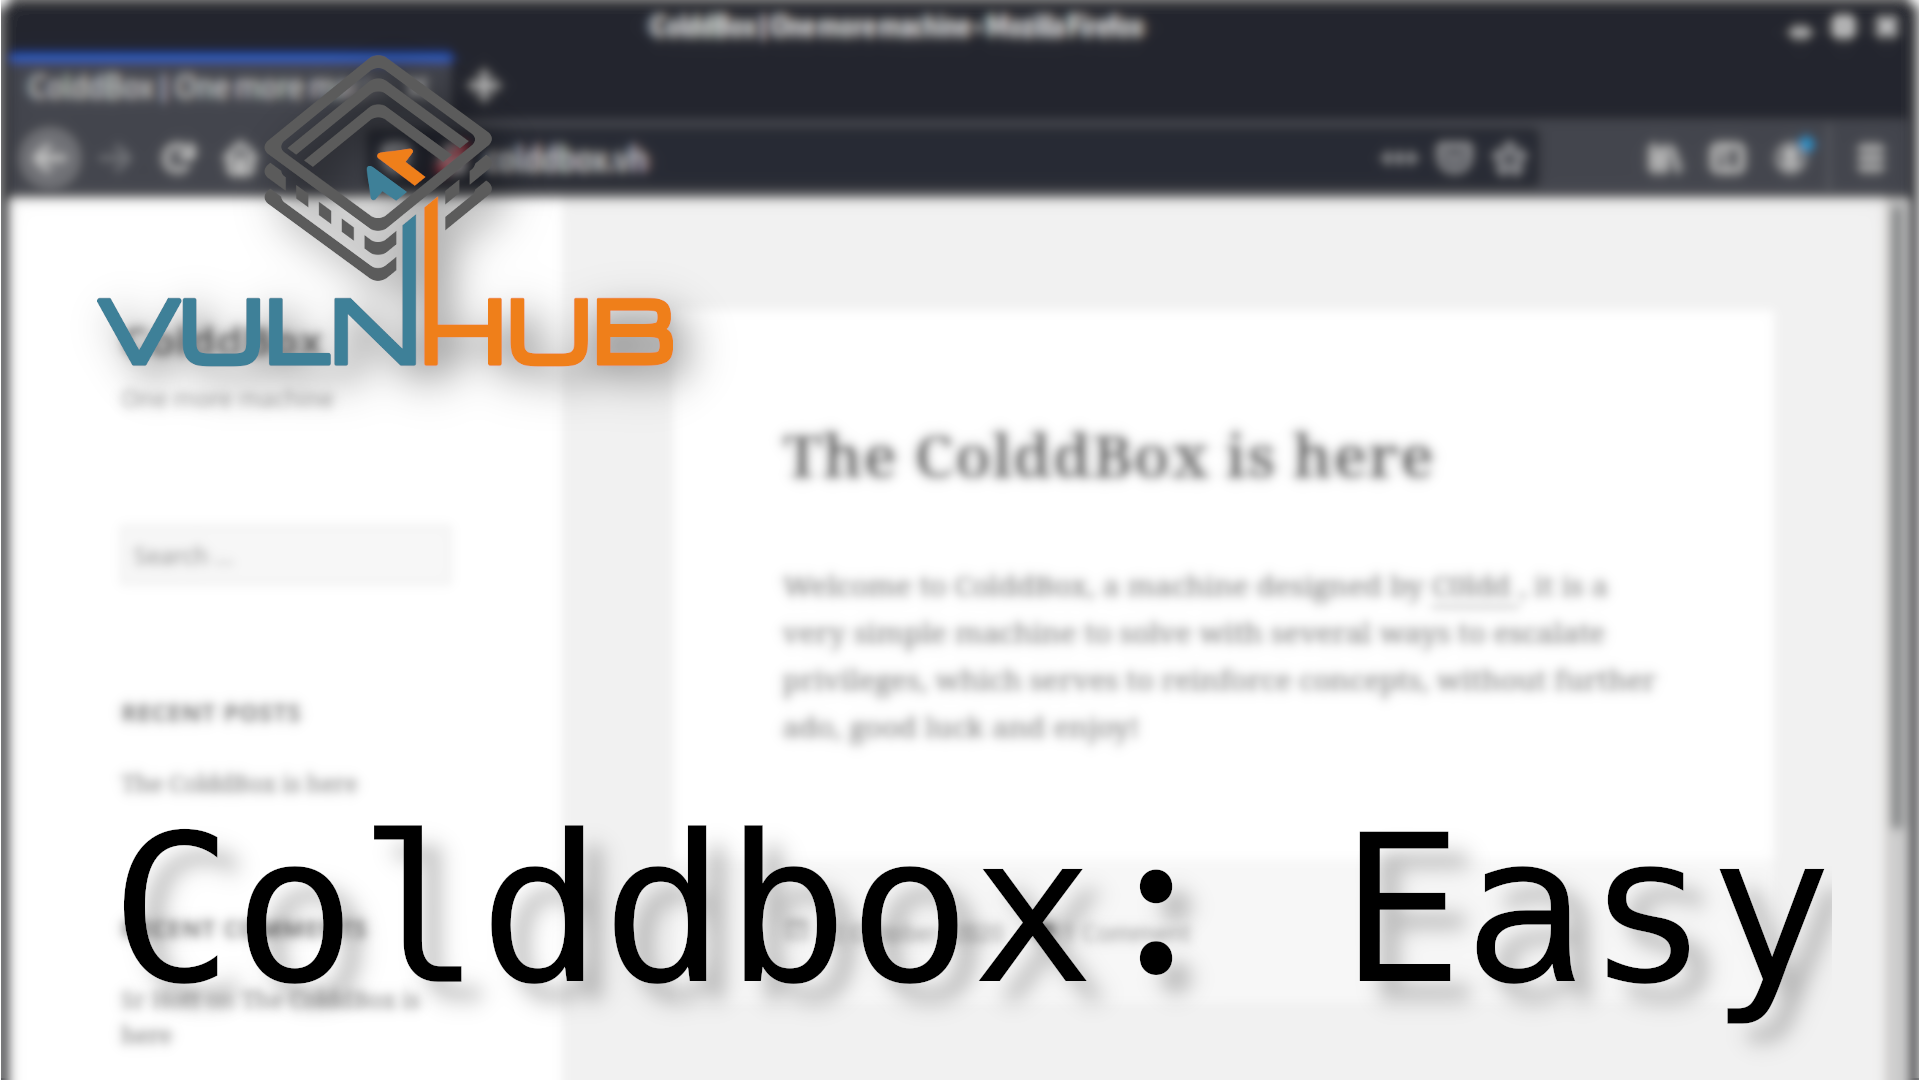 Hacking Homework: VulnHub/Colddbox-Easy